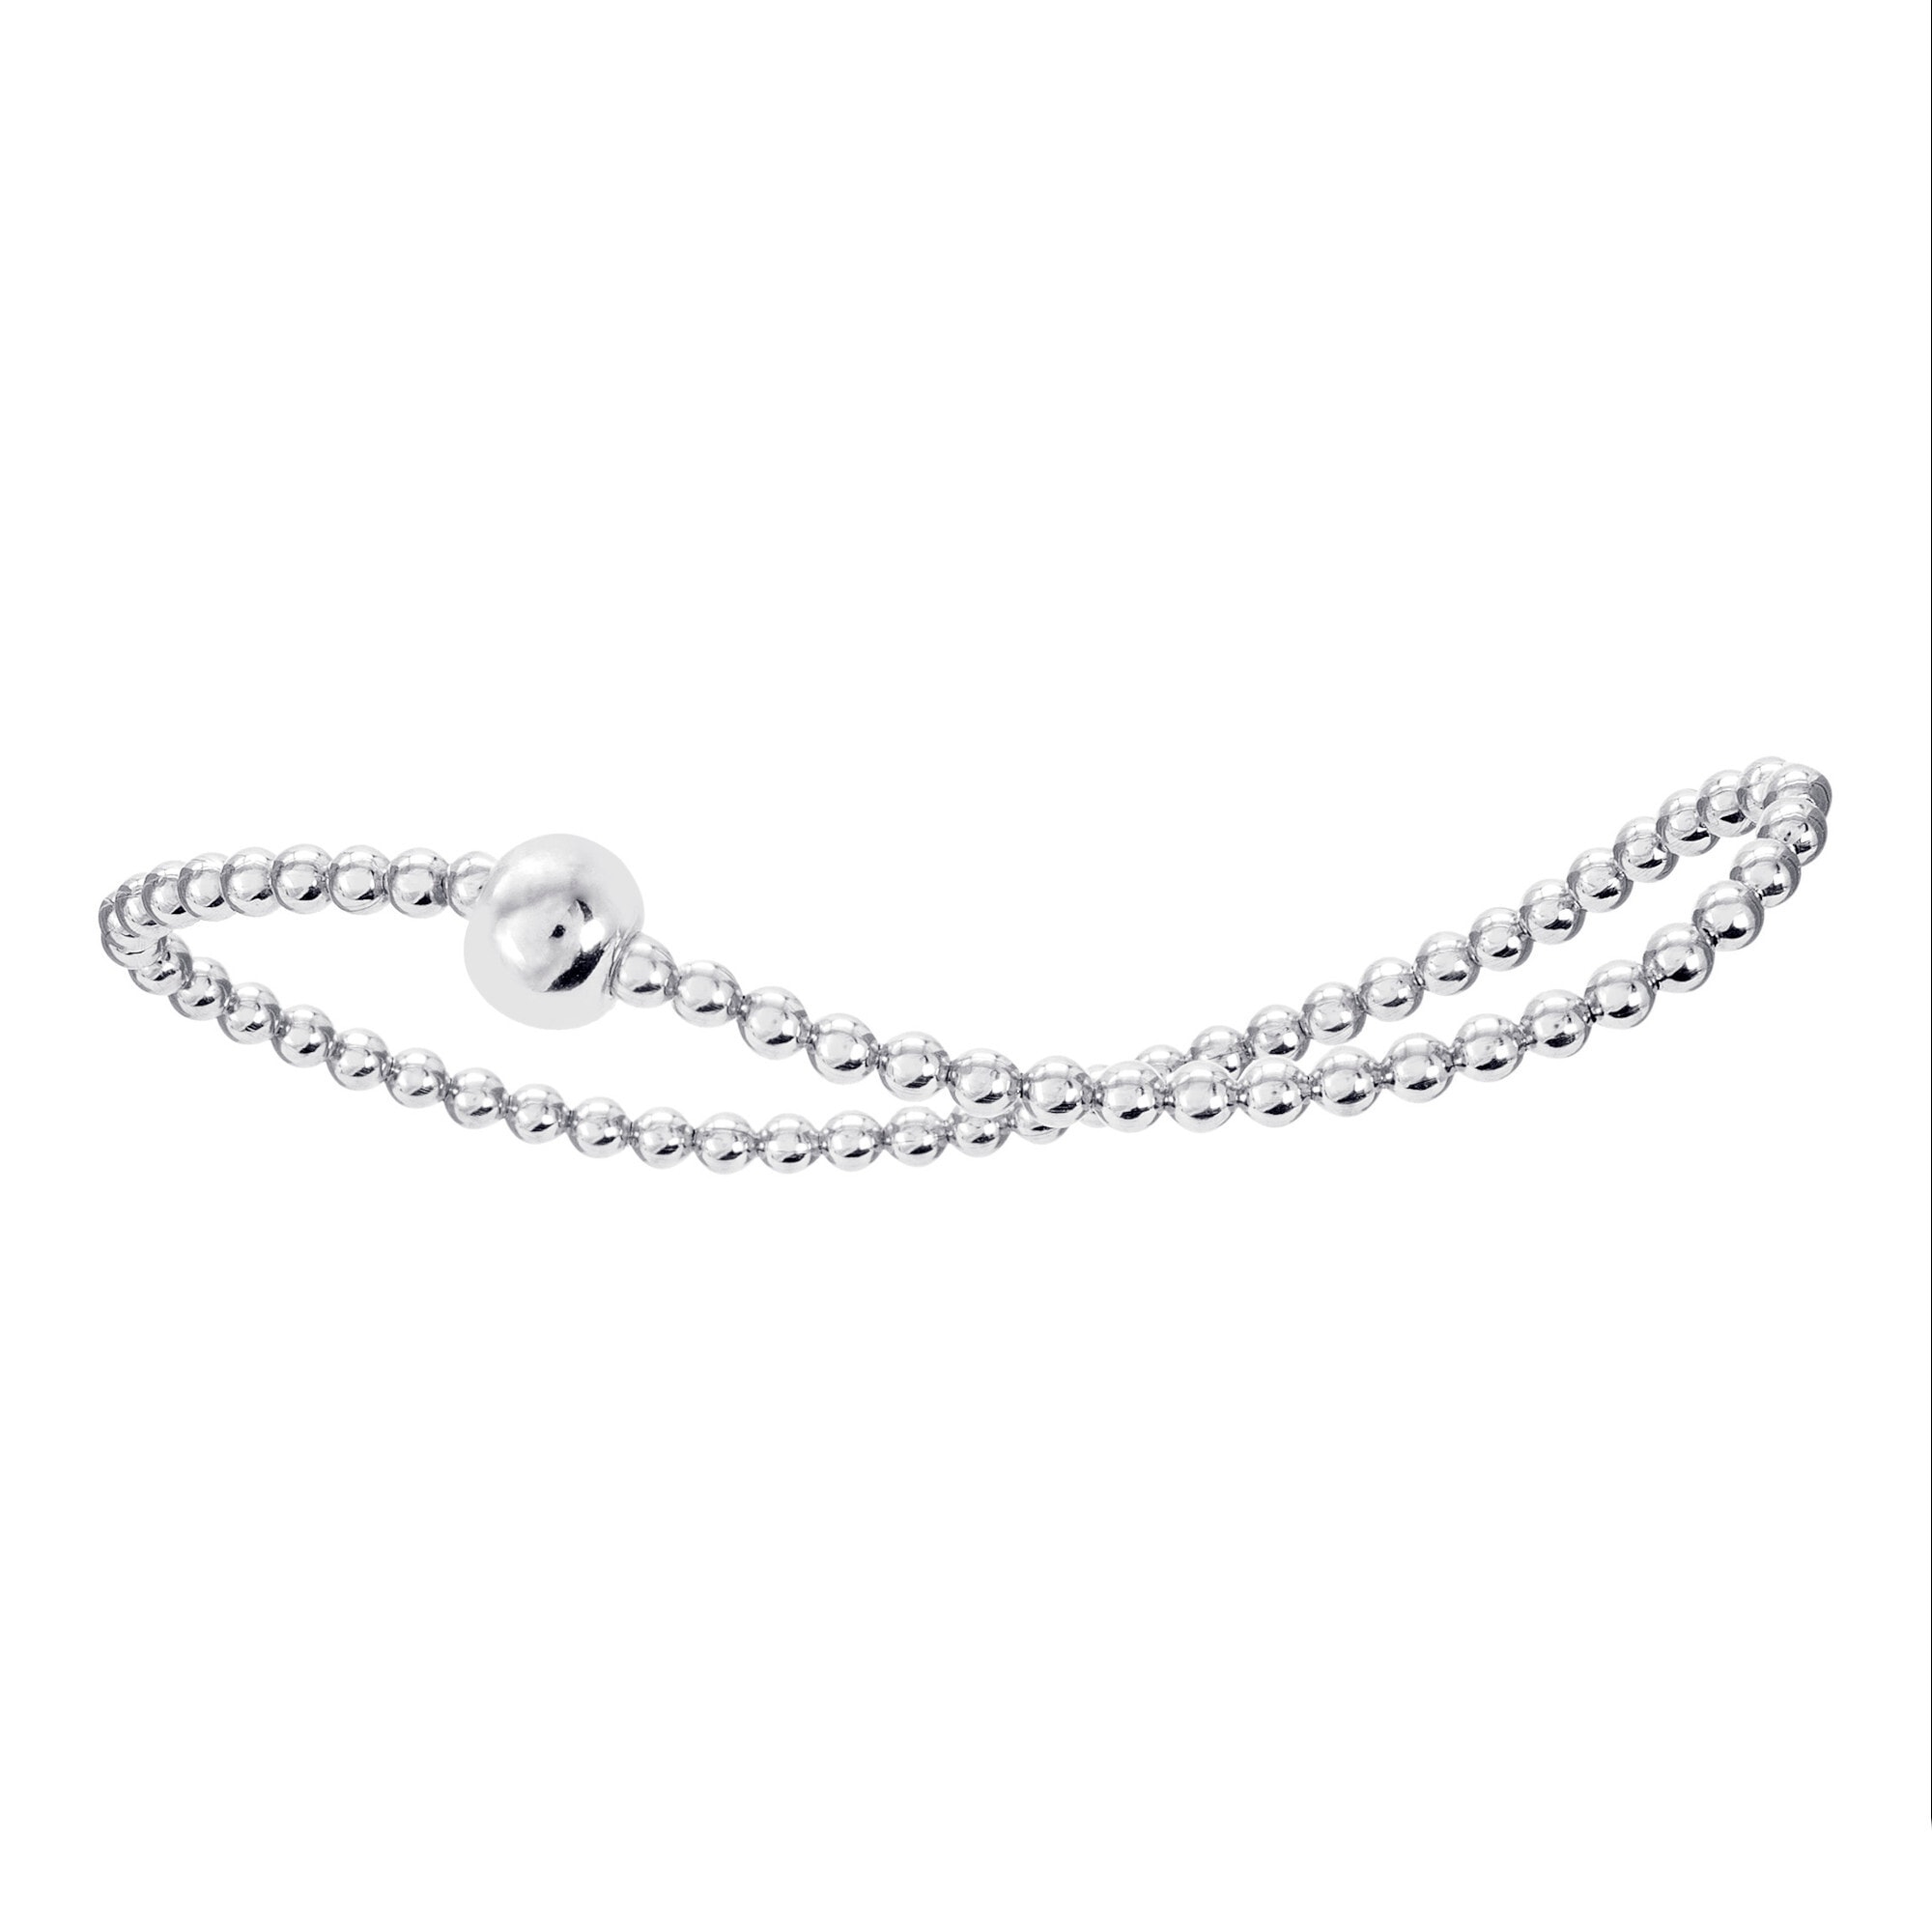 ONE ELEMENT Silberarmband »Armband aus 925 Silber Ø 54,0 mm mit Gummiband«, Damen Silber Schmuck Kugelkette